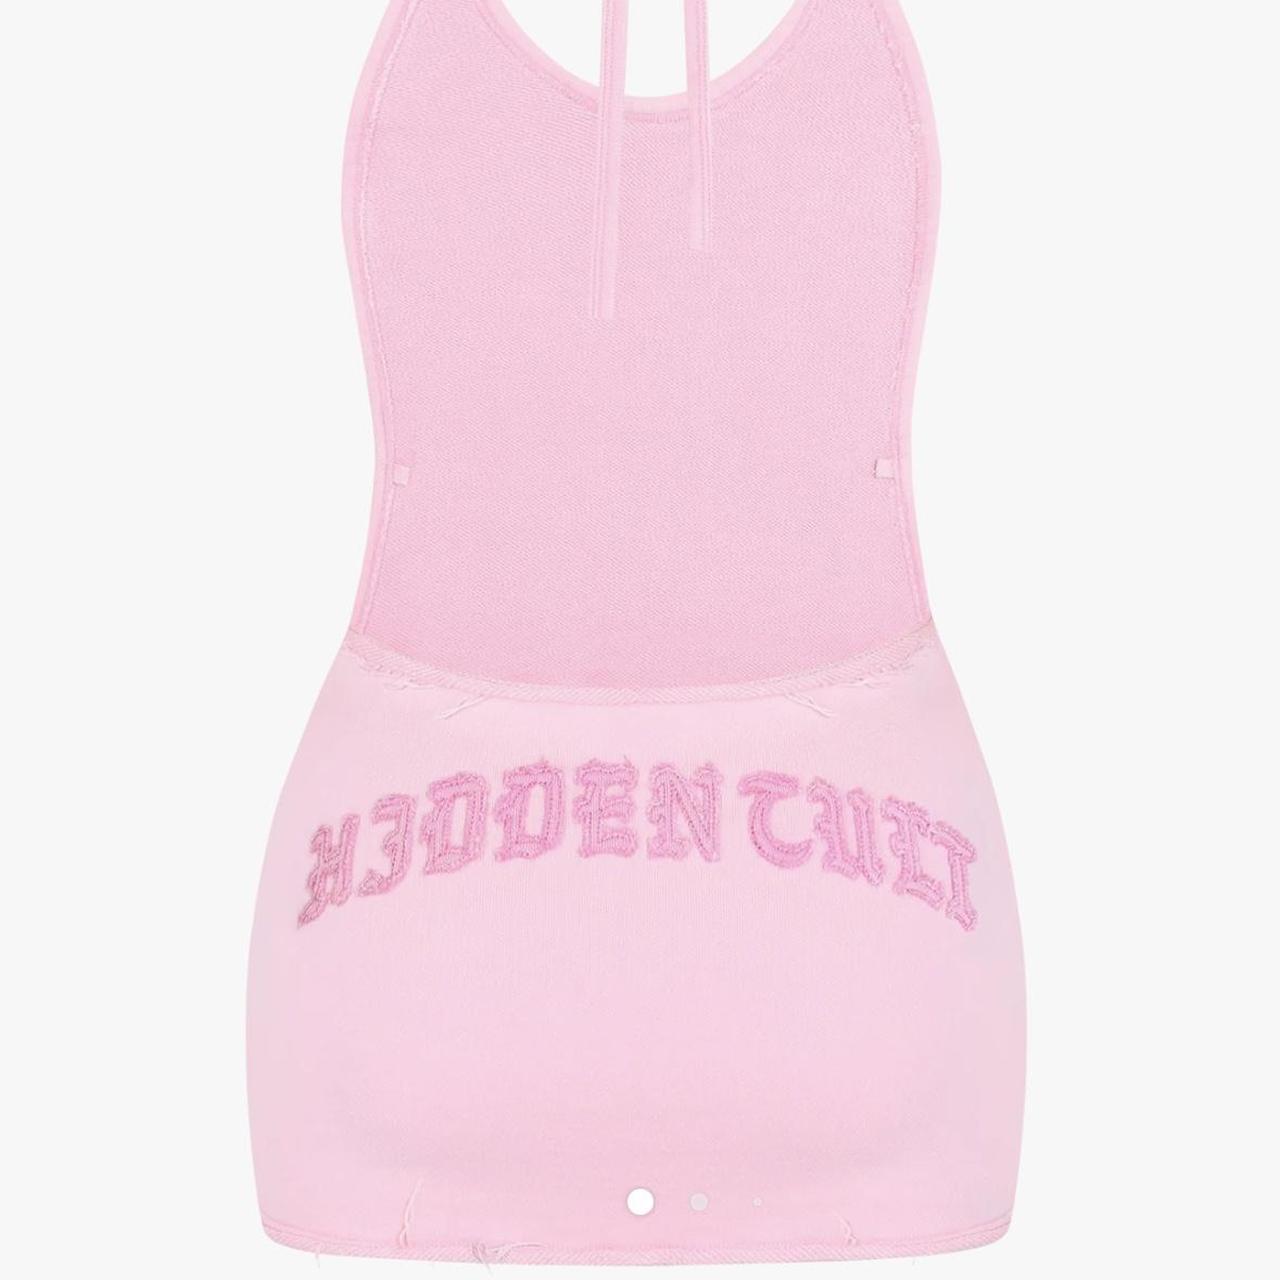 Hidden Cult Dress -Brand New -NWT will come in... - Depop